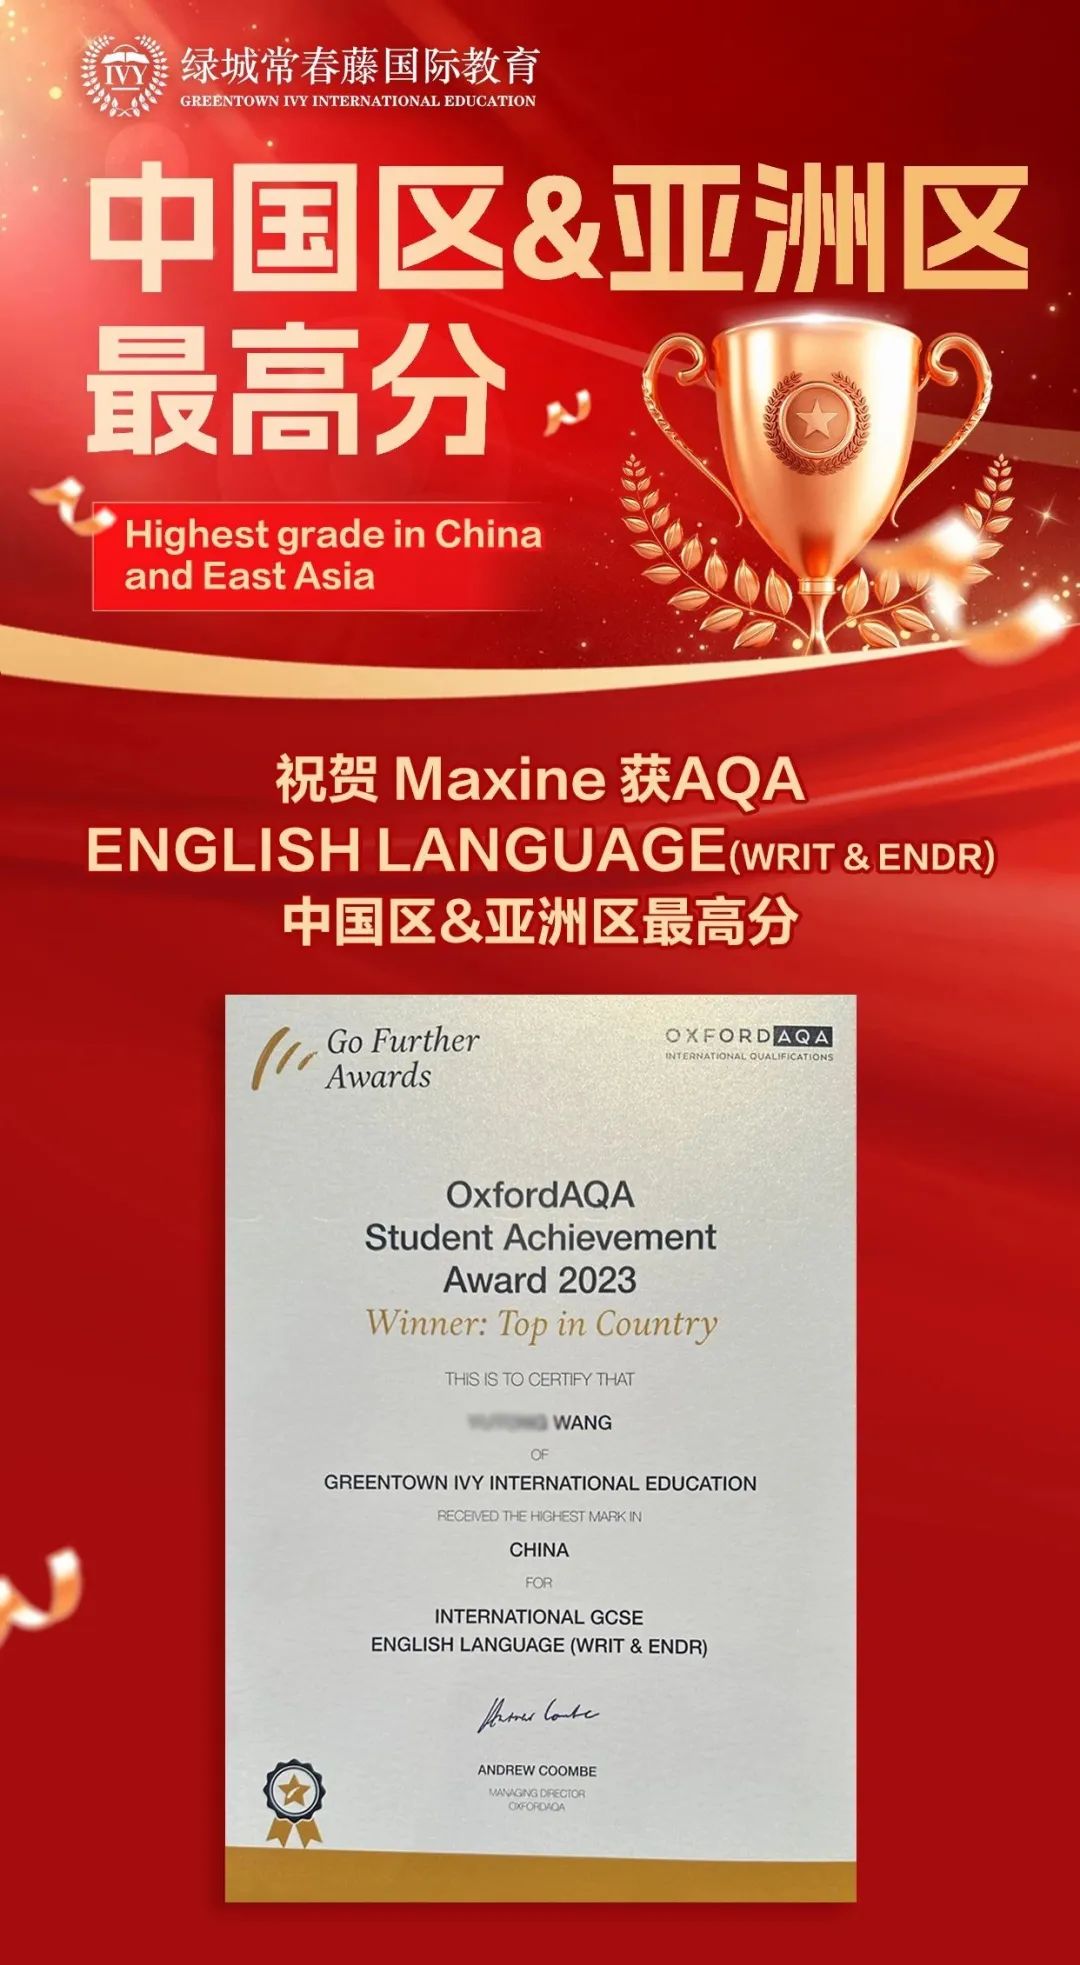 祝贺Maxine获AQA ENGLISH LANGUAGE(WRIT & ENDR) 中国区&亚洲区最高分！